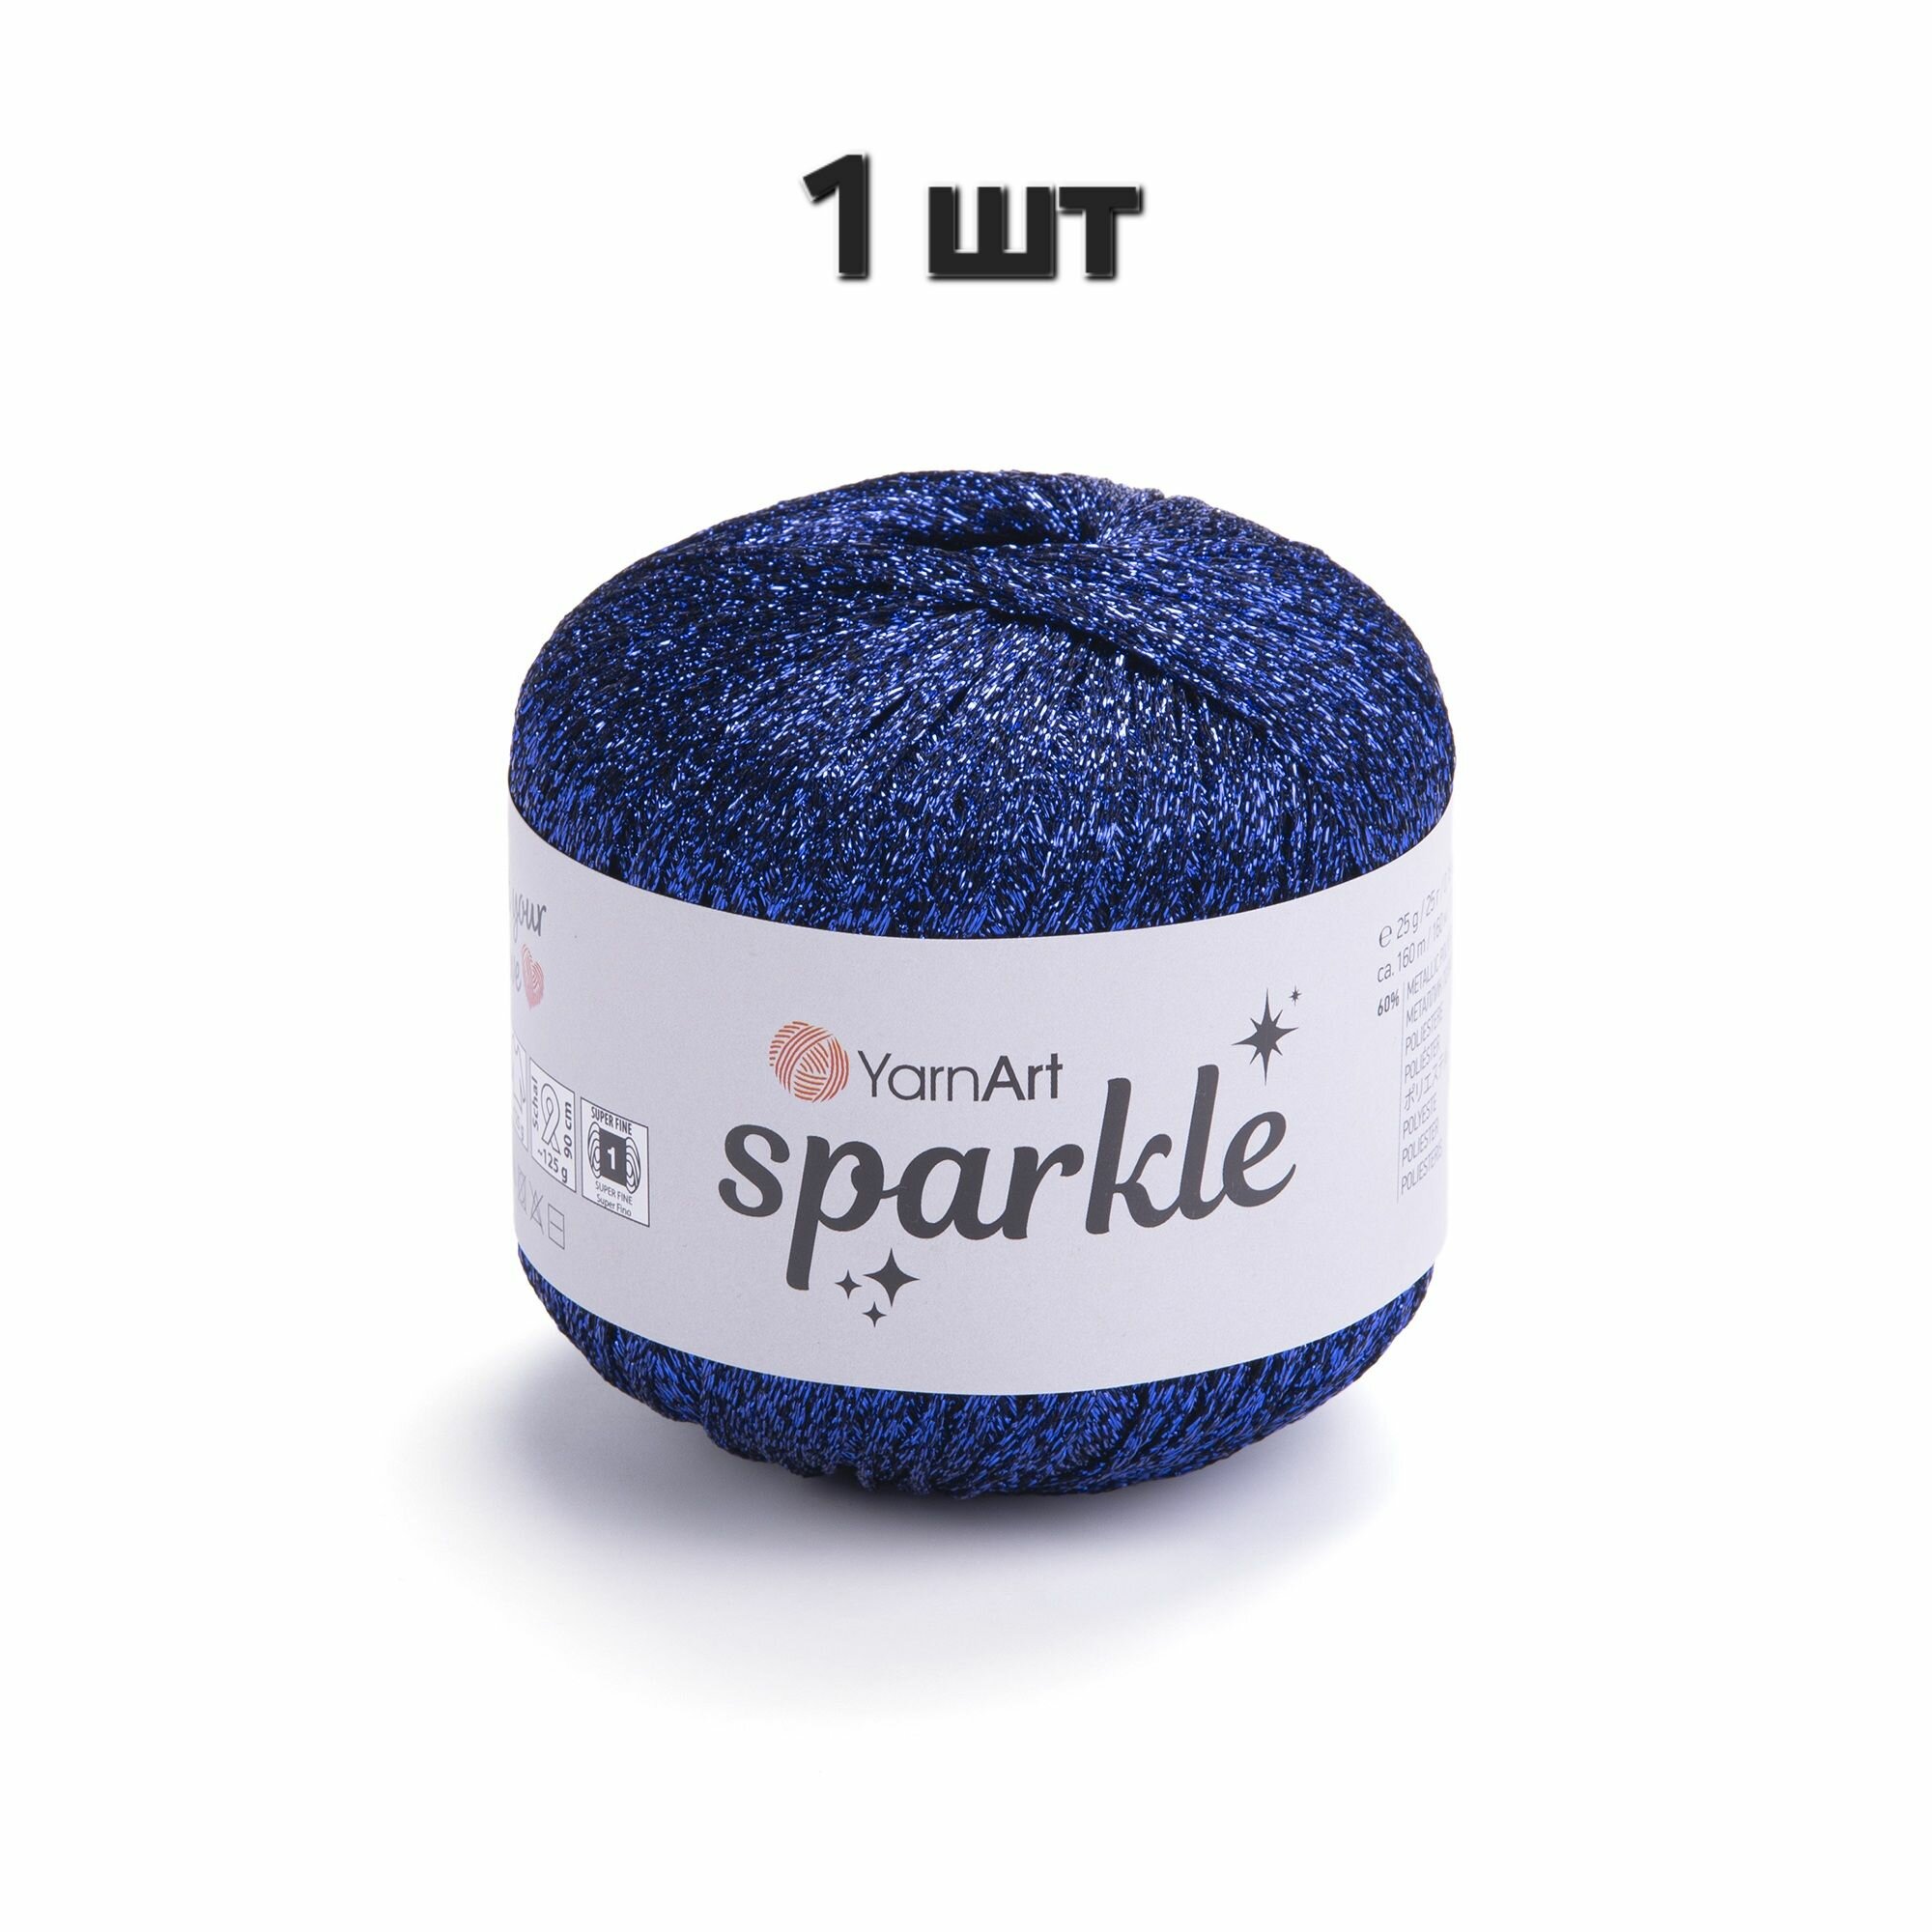 Пряжа YarnArt Sparkle Синий (1324) 1 моток 25 г/160 м (60% металлик, 40% полиамид) ярнарт спаркл